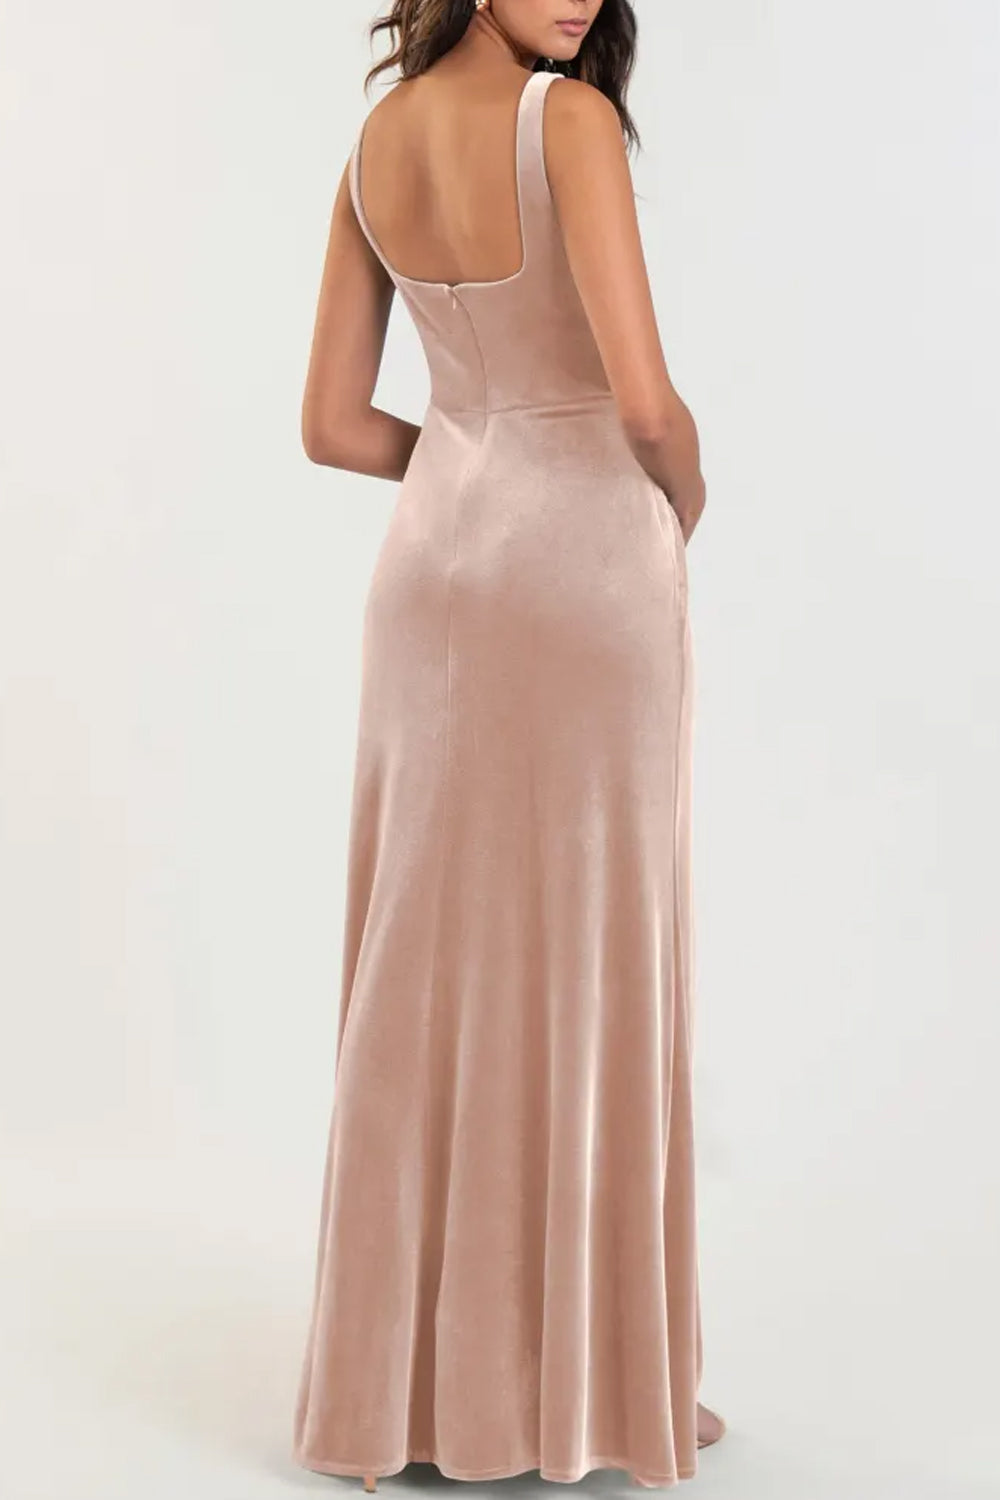 Velvet Boat Neck Sleeveless Bridesmaid Dress| Plus Size | 60+ Colors